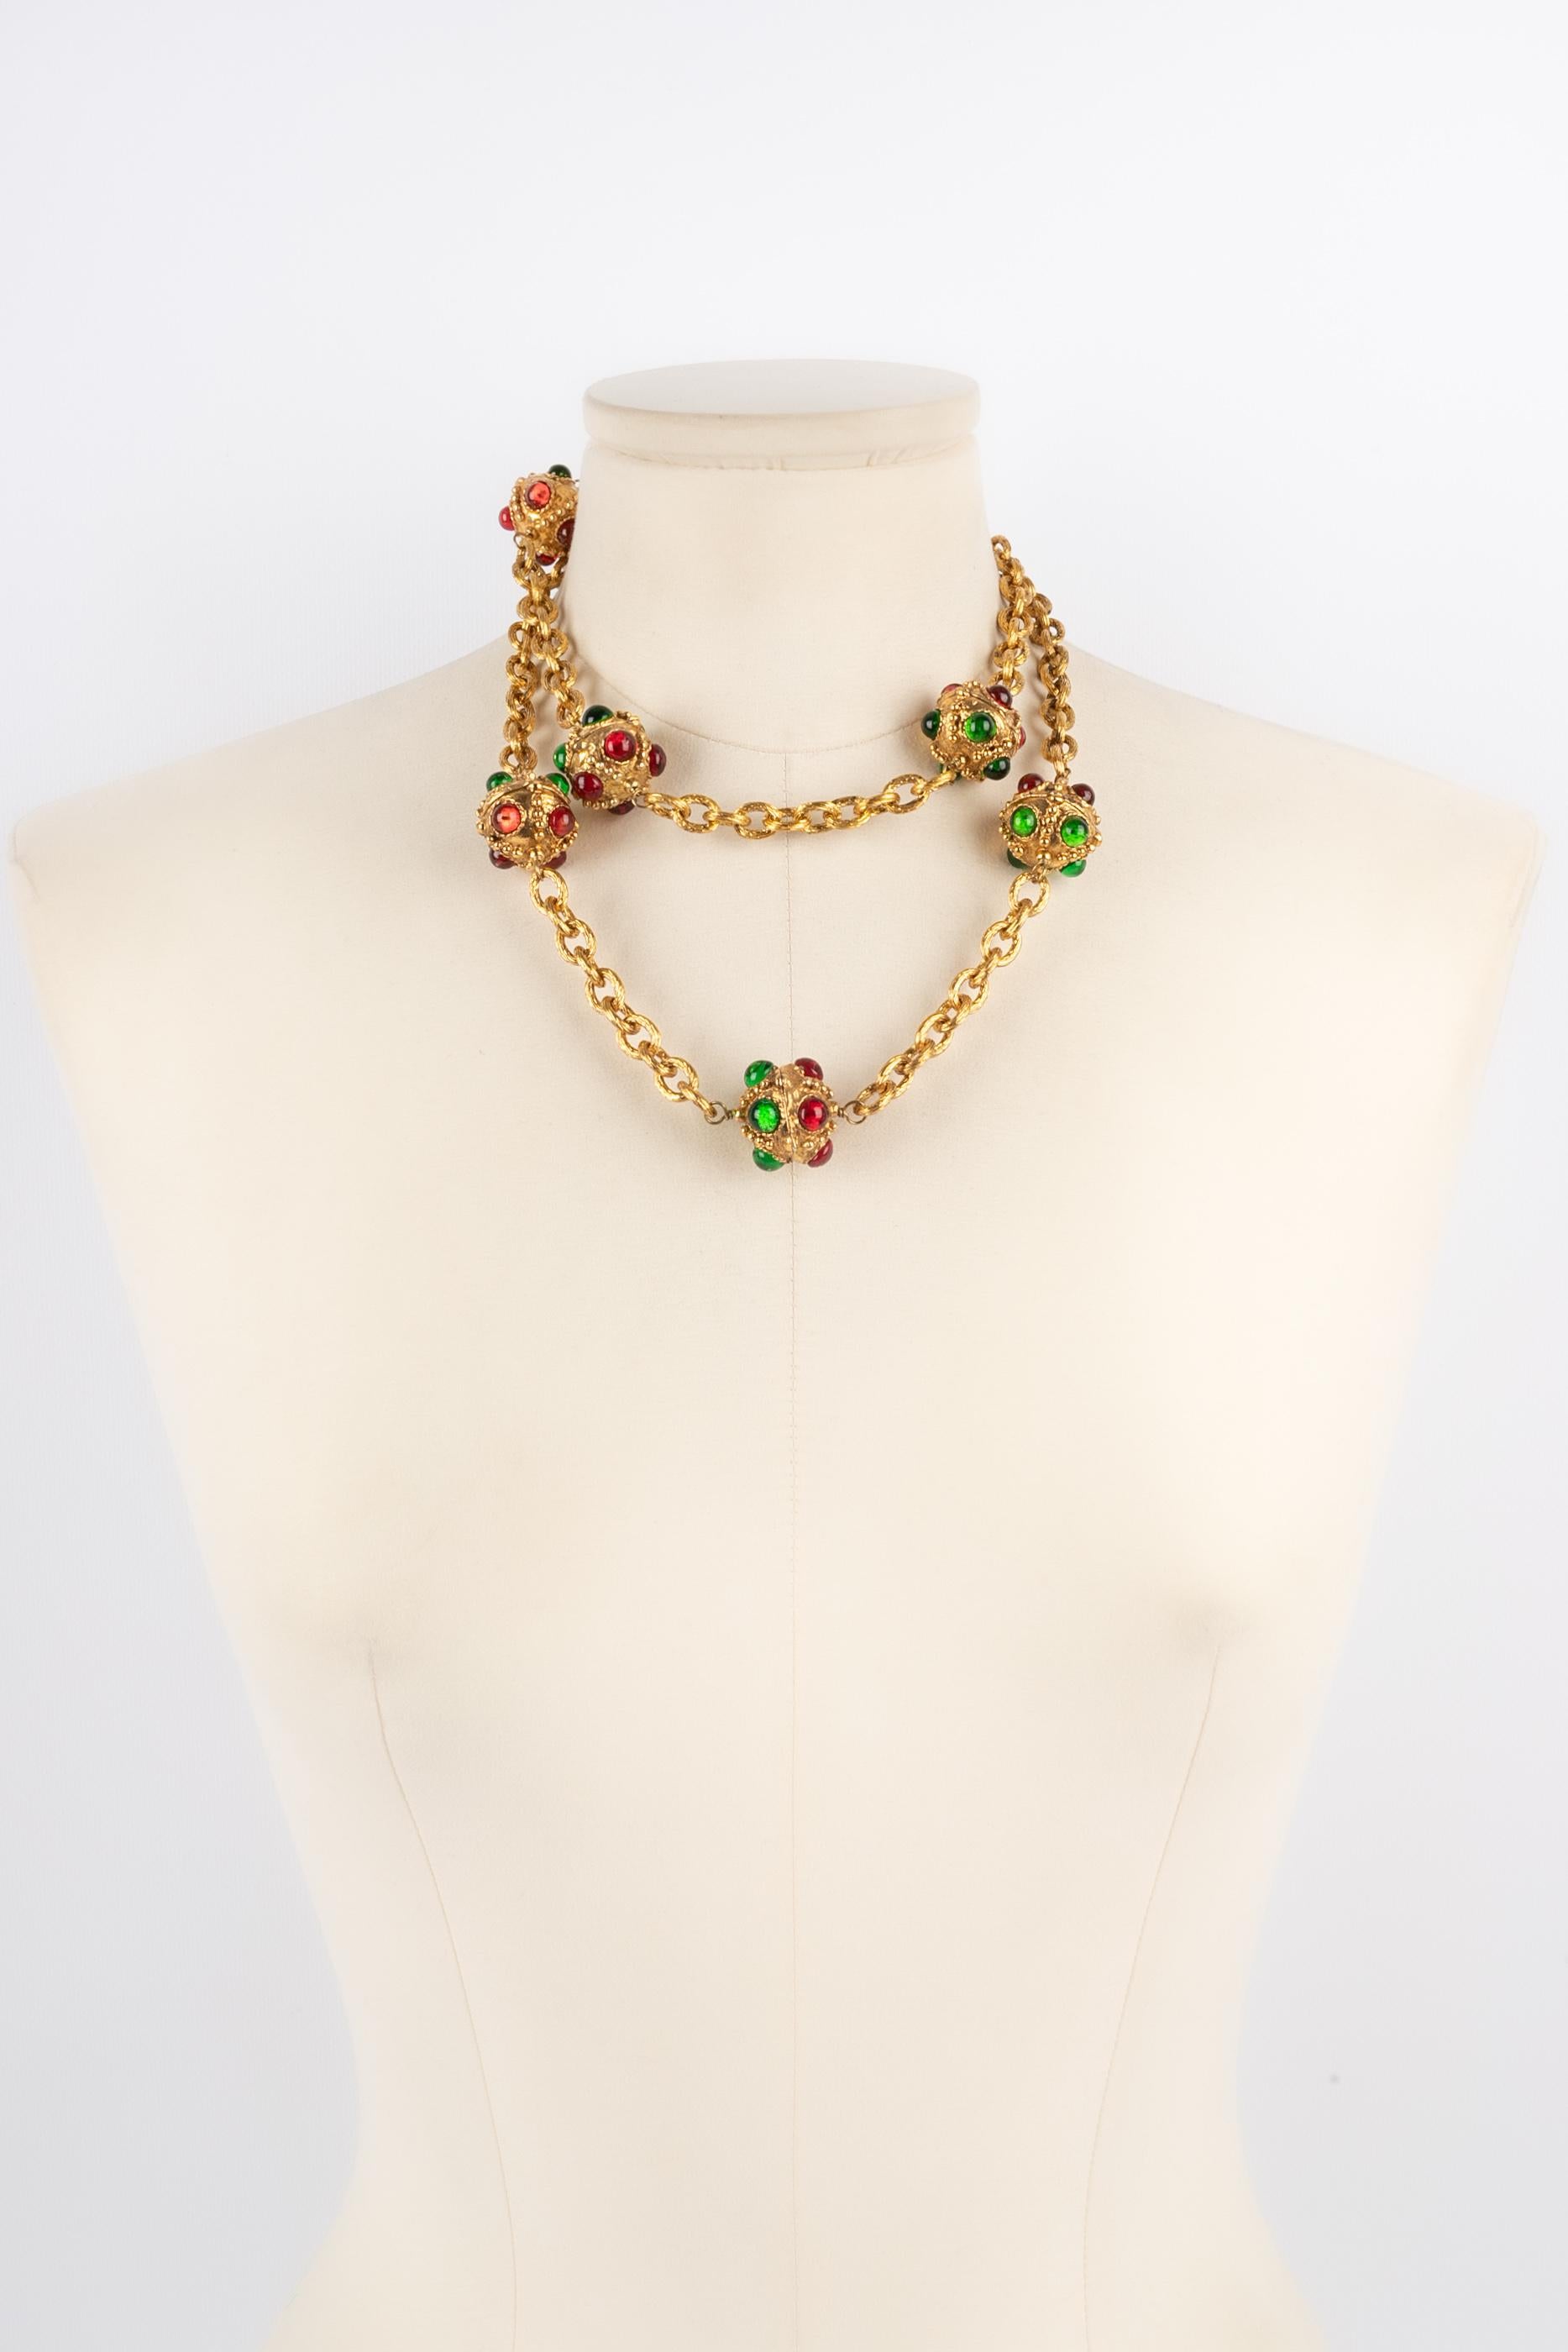 Chanel Byzantine necklace 8